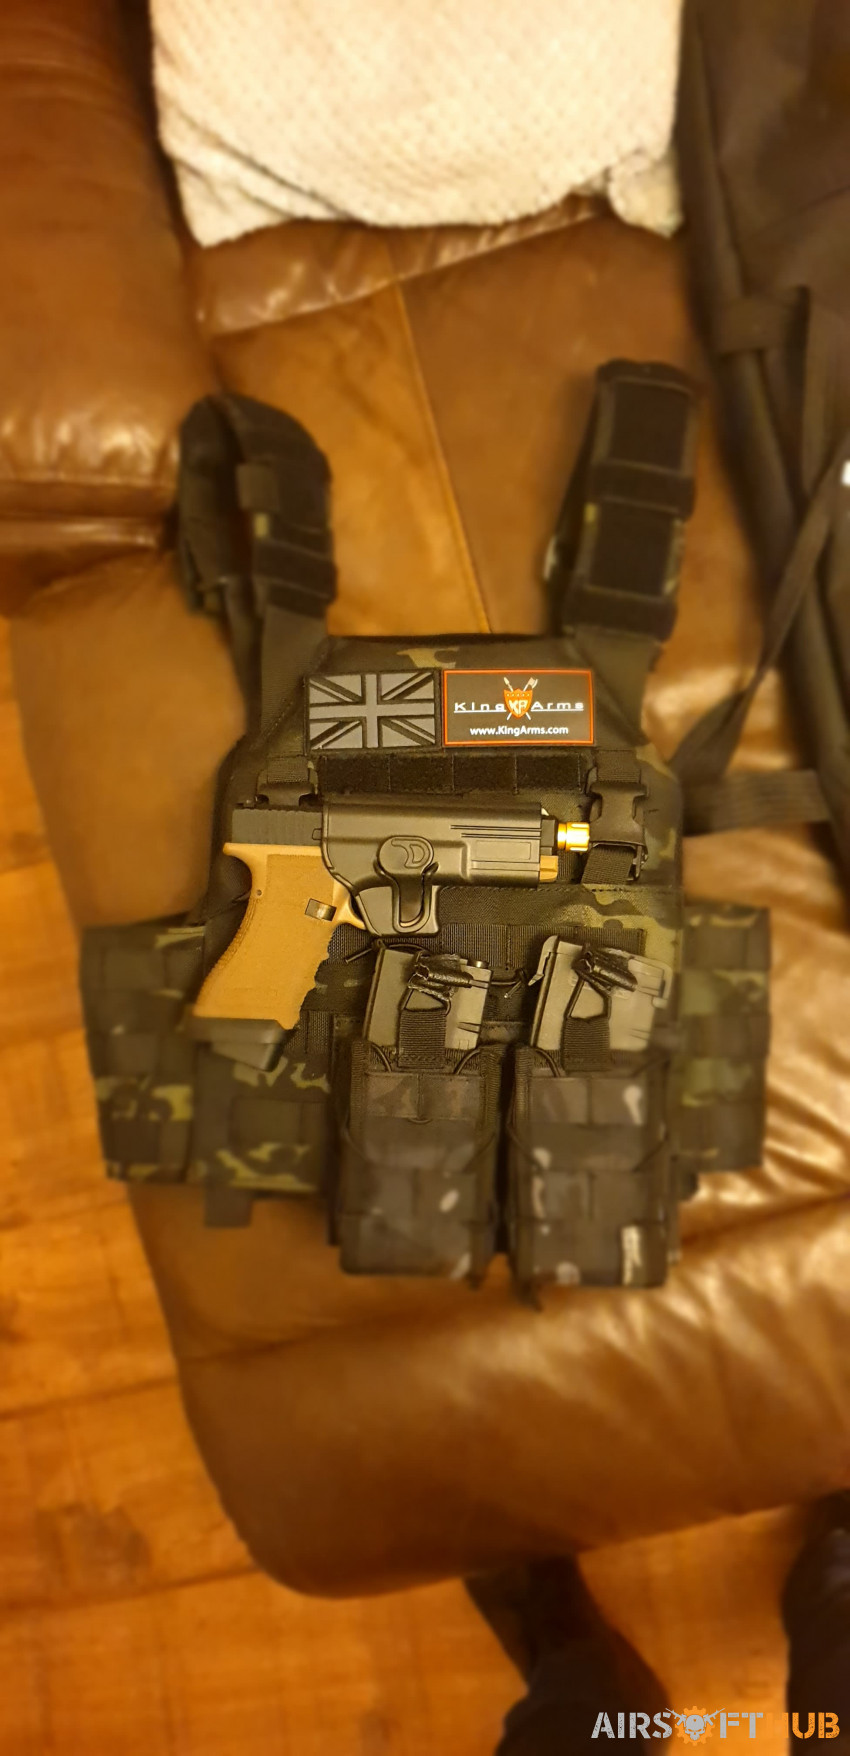 Kingarms Glock 17 full set up - Used airsoft equipment